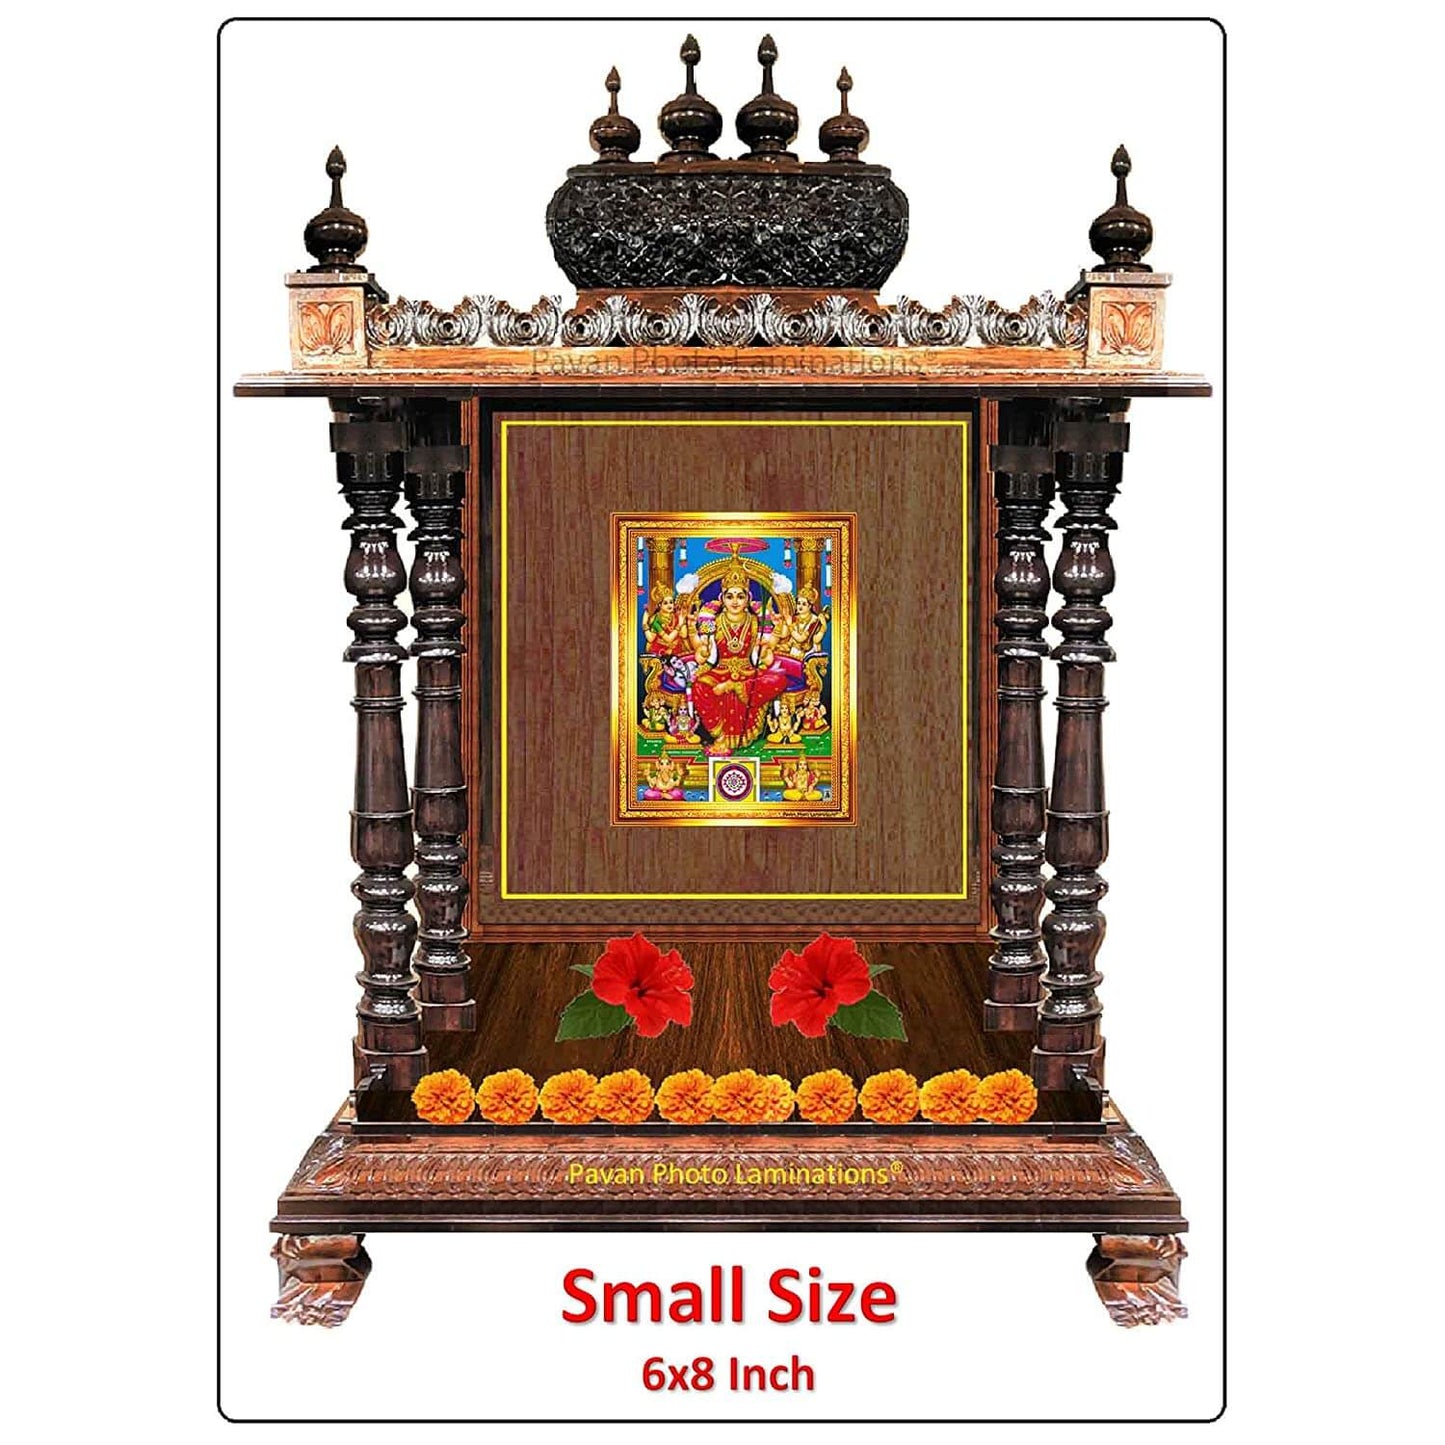 Sri Raja Rajeshwari Devi Lalita Tripura Sundari Amman Photo Frame (Golden Color, Small Size 6x8 Inch) Mangal Fashions | Indian Home Decor and Craft